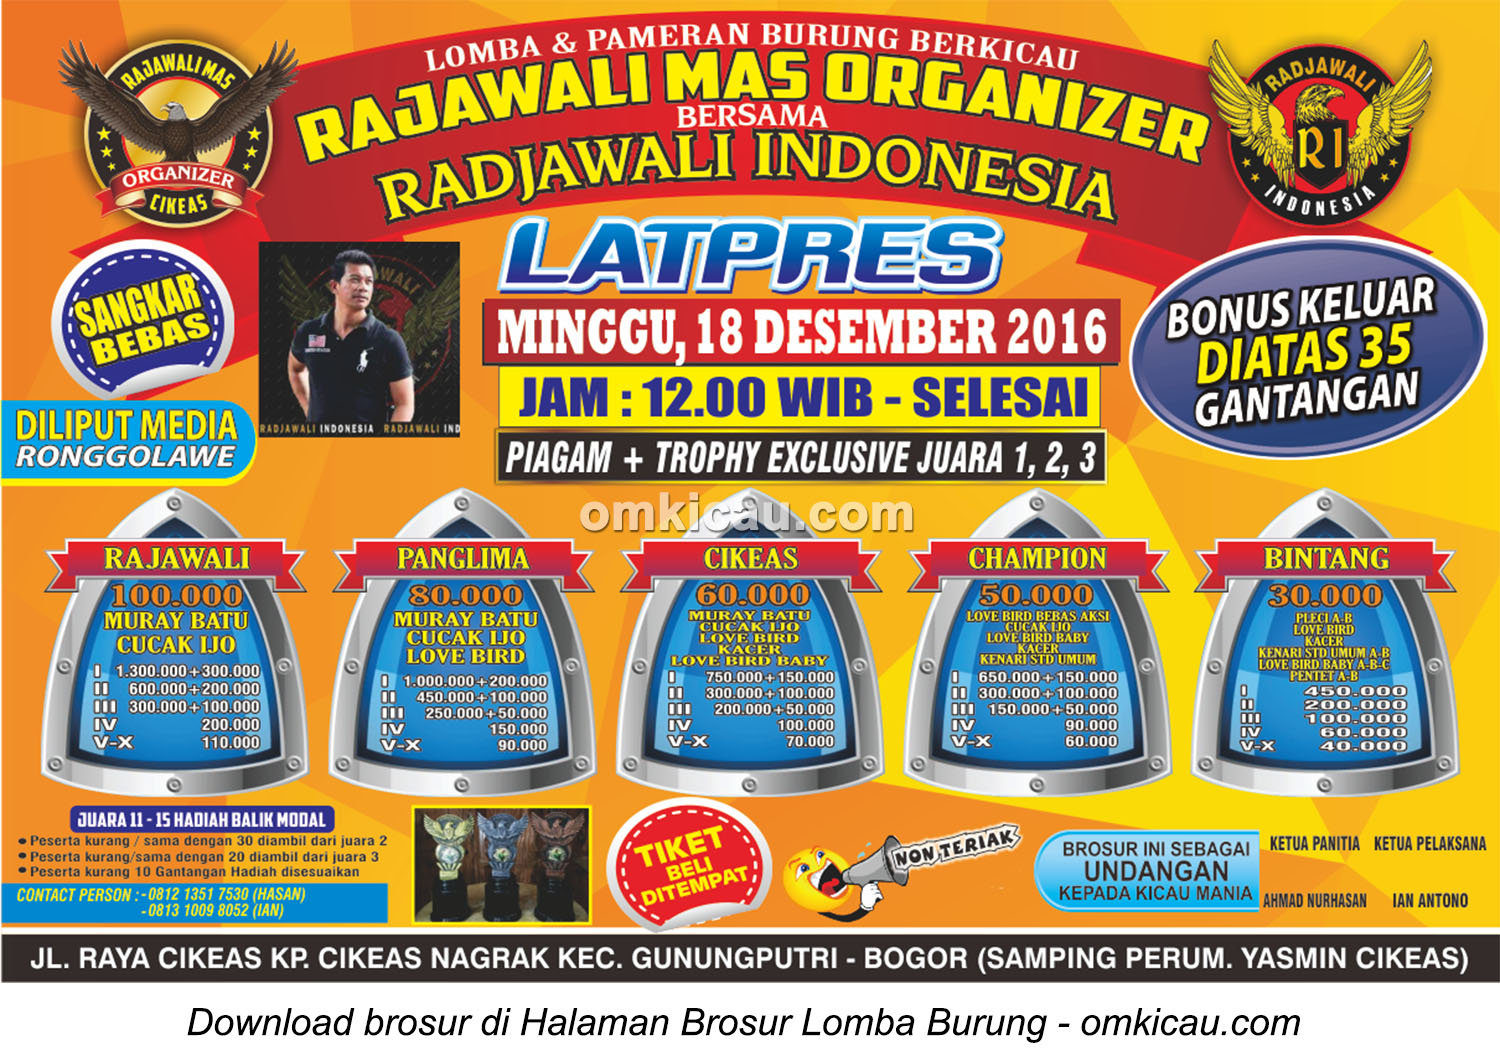 Brosur Latpres Rajawali Mas Organizer bersama Radjawali Indonesia, Bogor, 18 Desember 2016